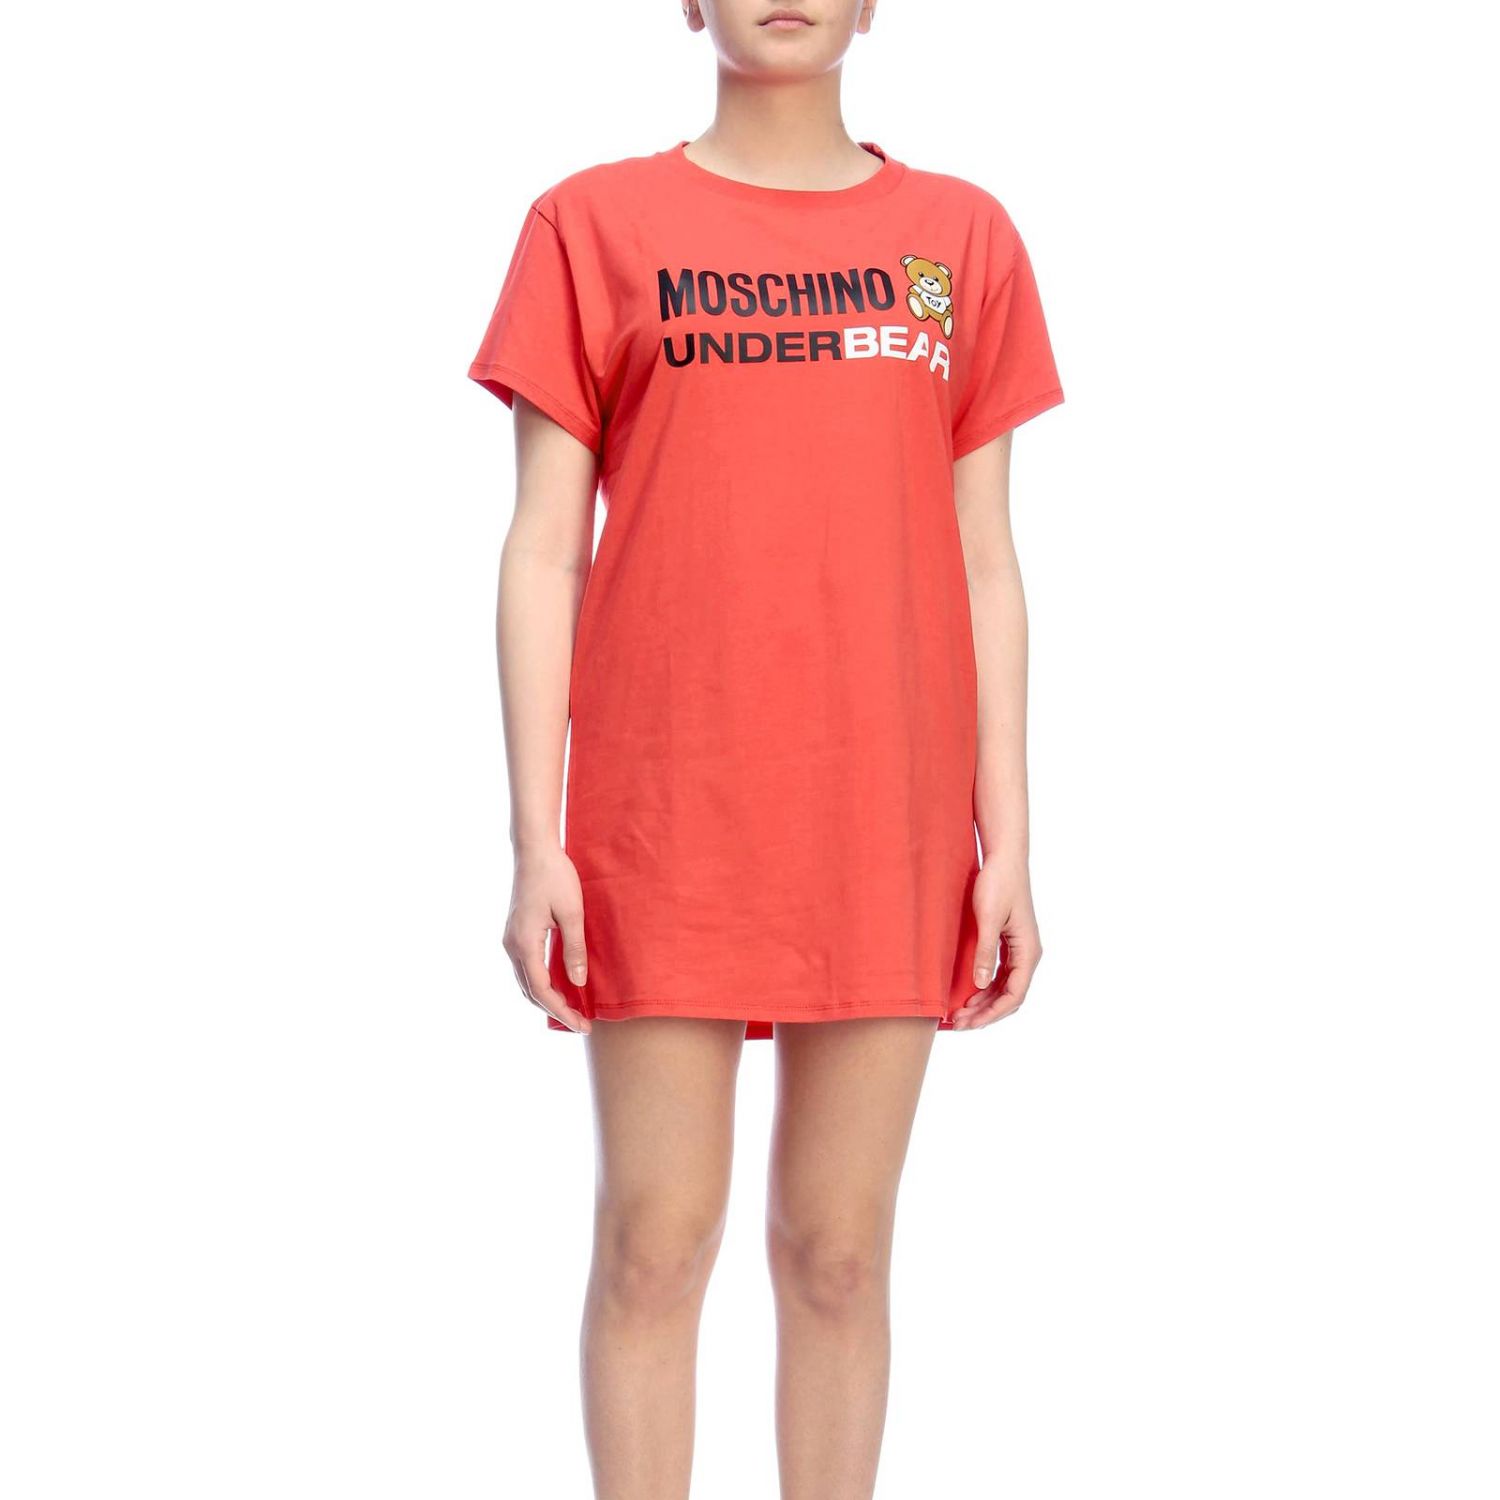 Moschino Outlet: T-shirt women Underbear | T-Shirt Moschino Women Red ...